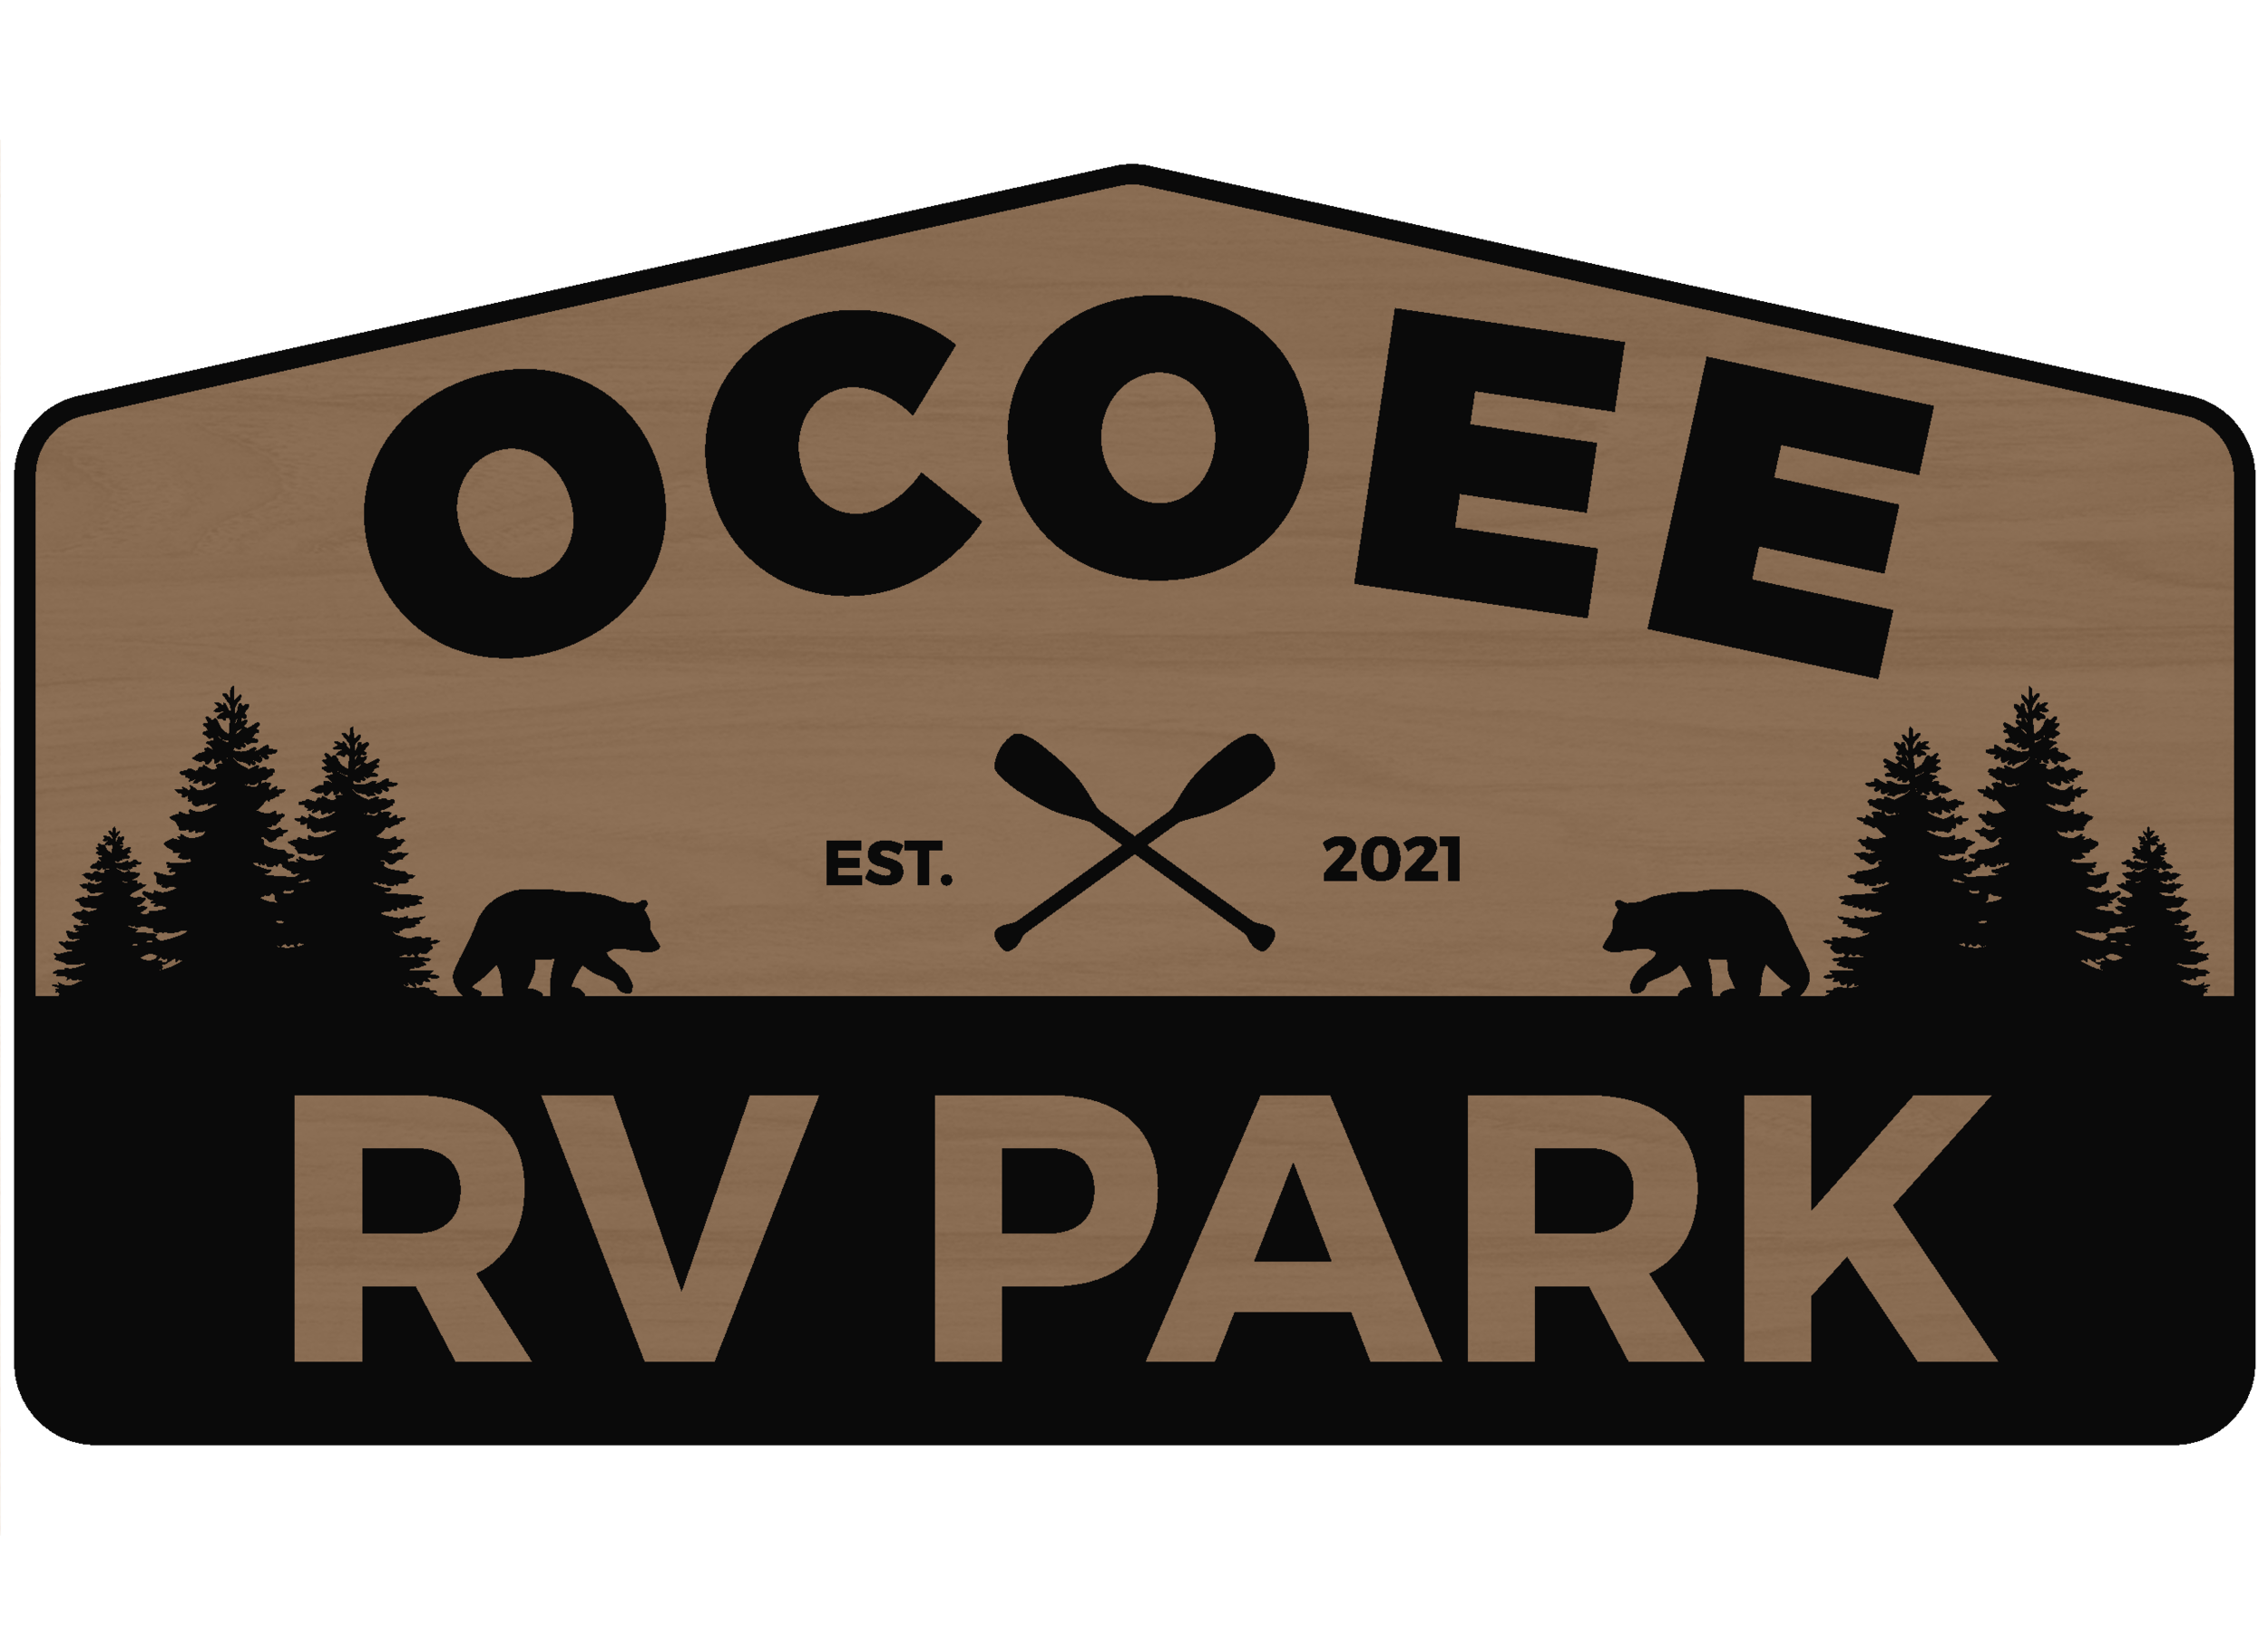 Ocoee RV Park